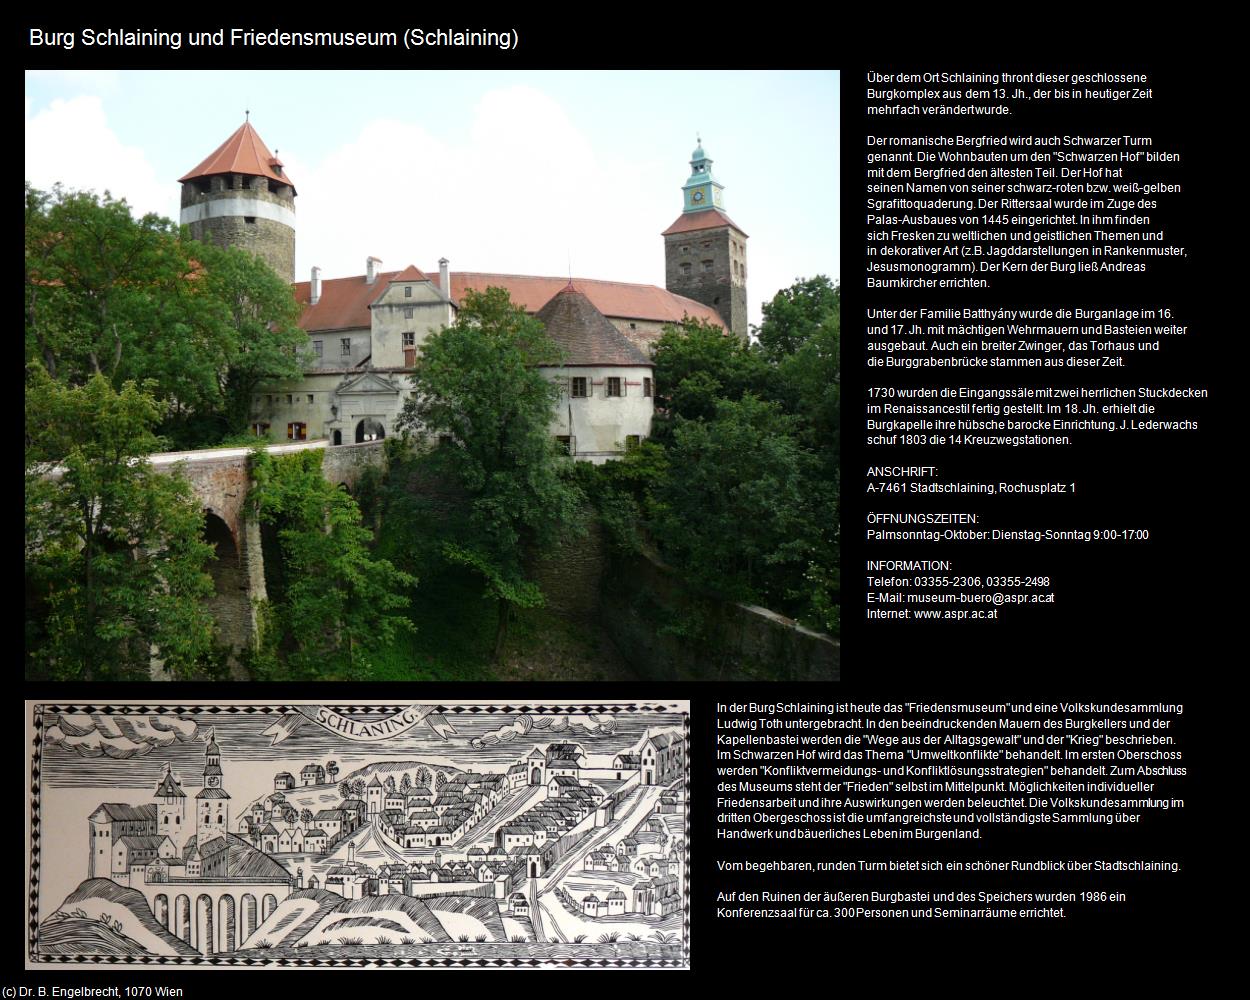 Burg Schlaining (Stadtschlaining) in Kulturatlas-BURGENLAND